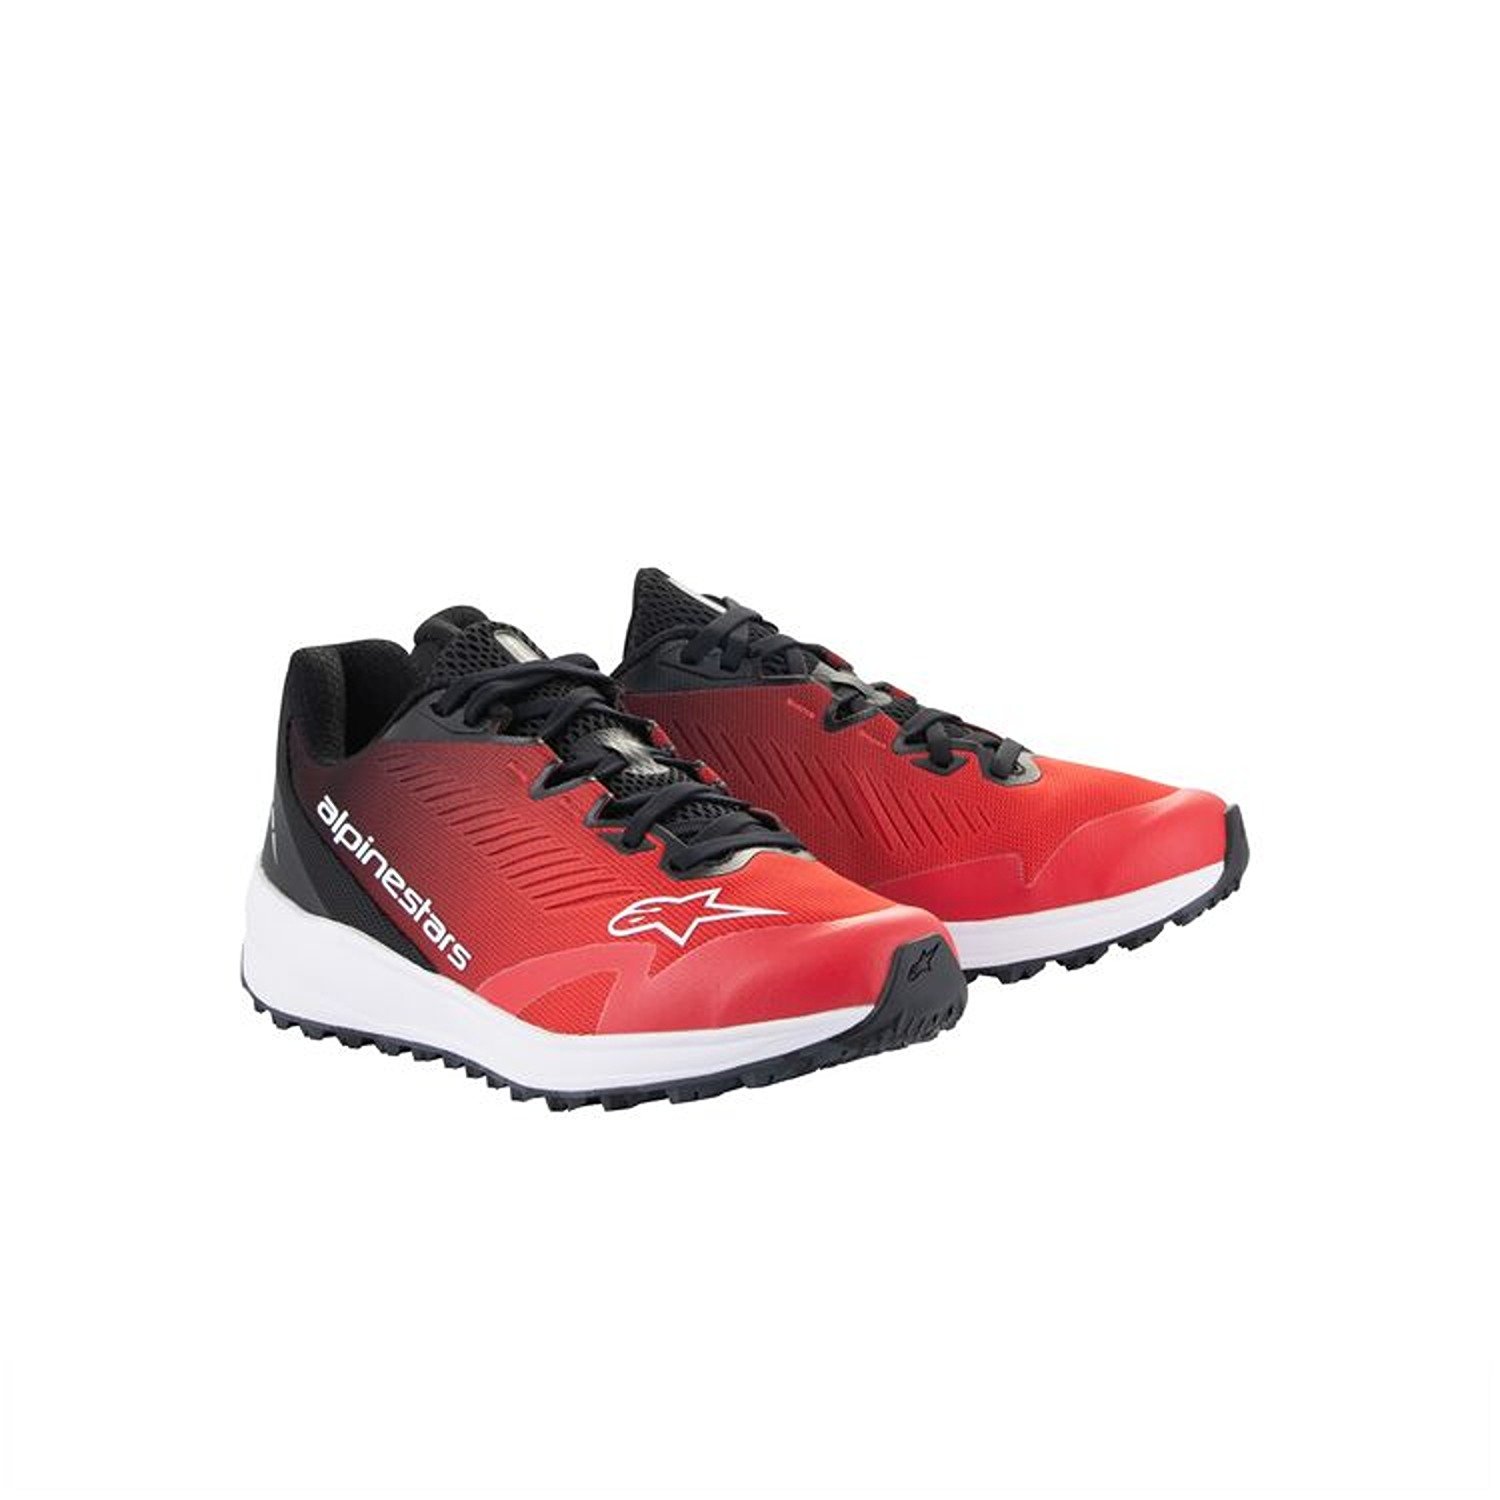 Image of Alpinestars Meta Road V2 Shoes Red Black White Size US 7 ID 8059347381428